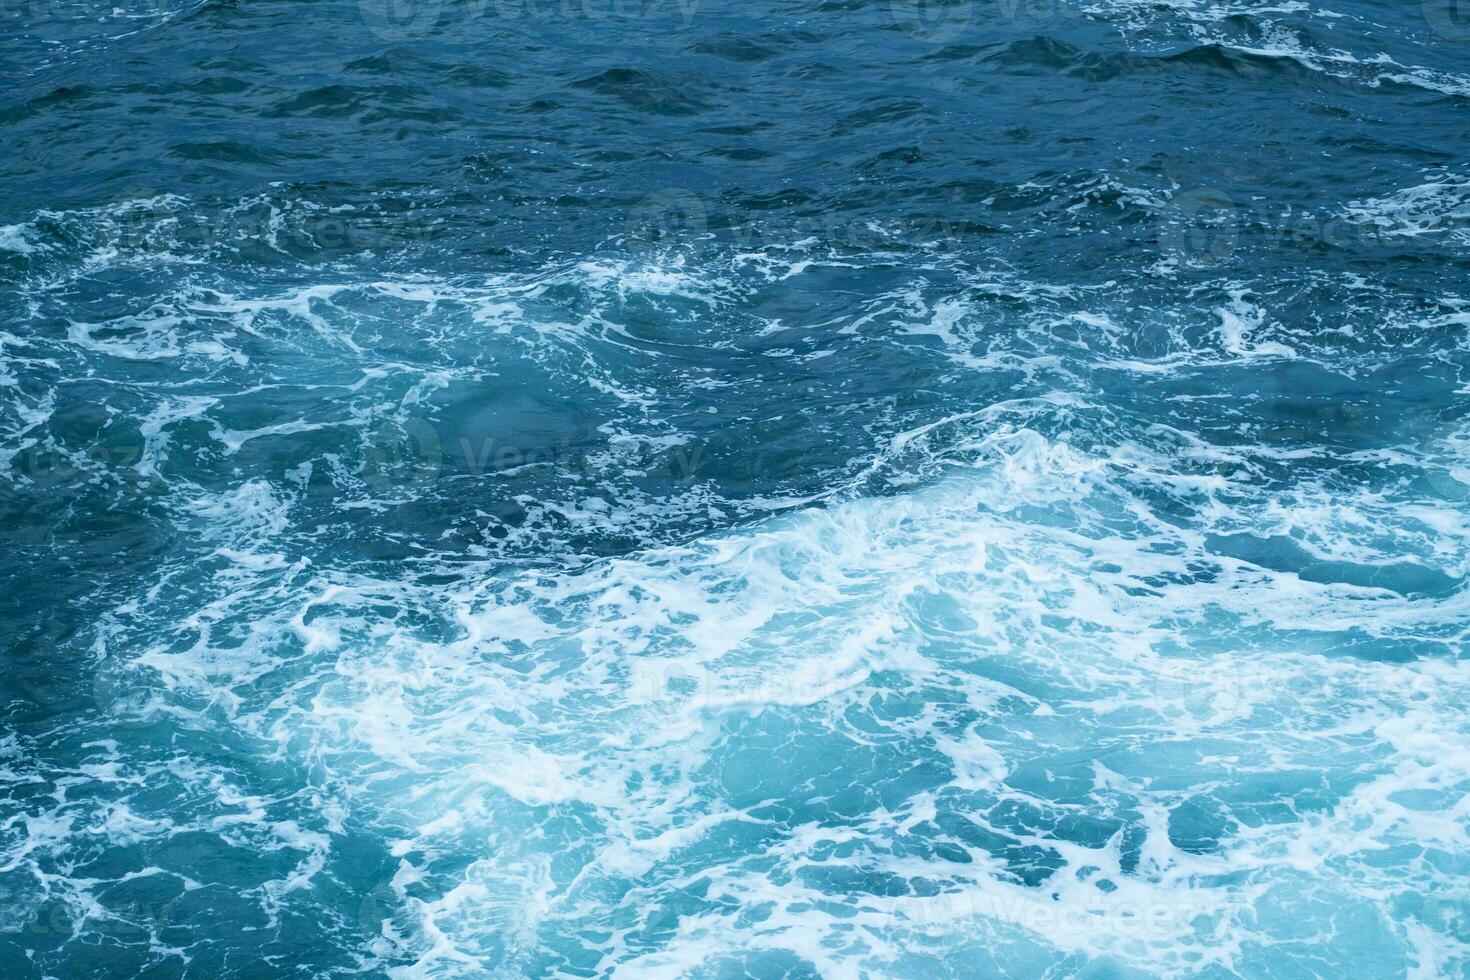 oceaan oppervlak. abstract water achtergrond. Golf patroon. foto